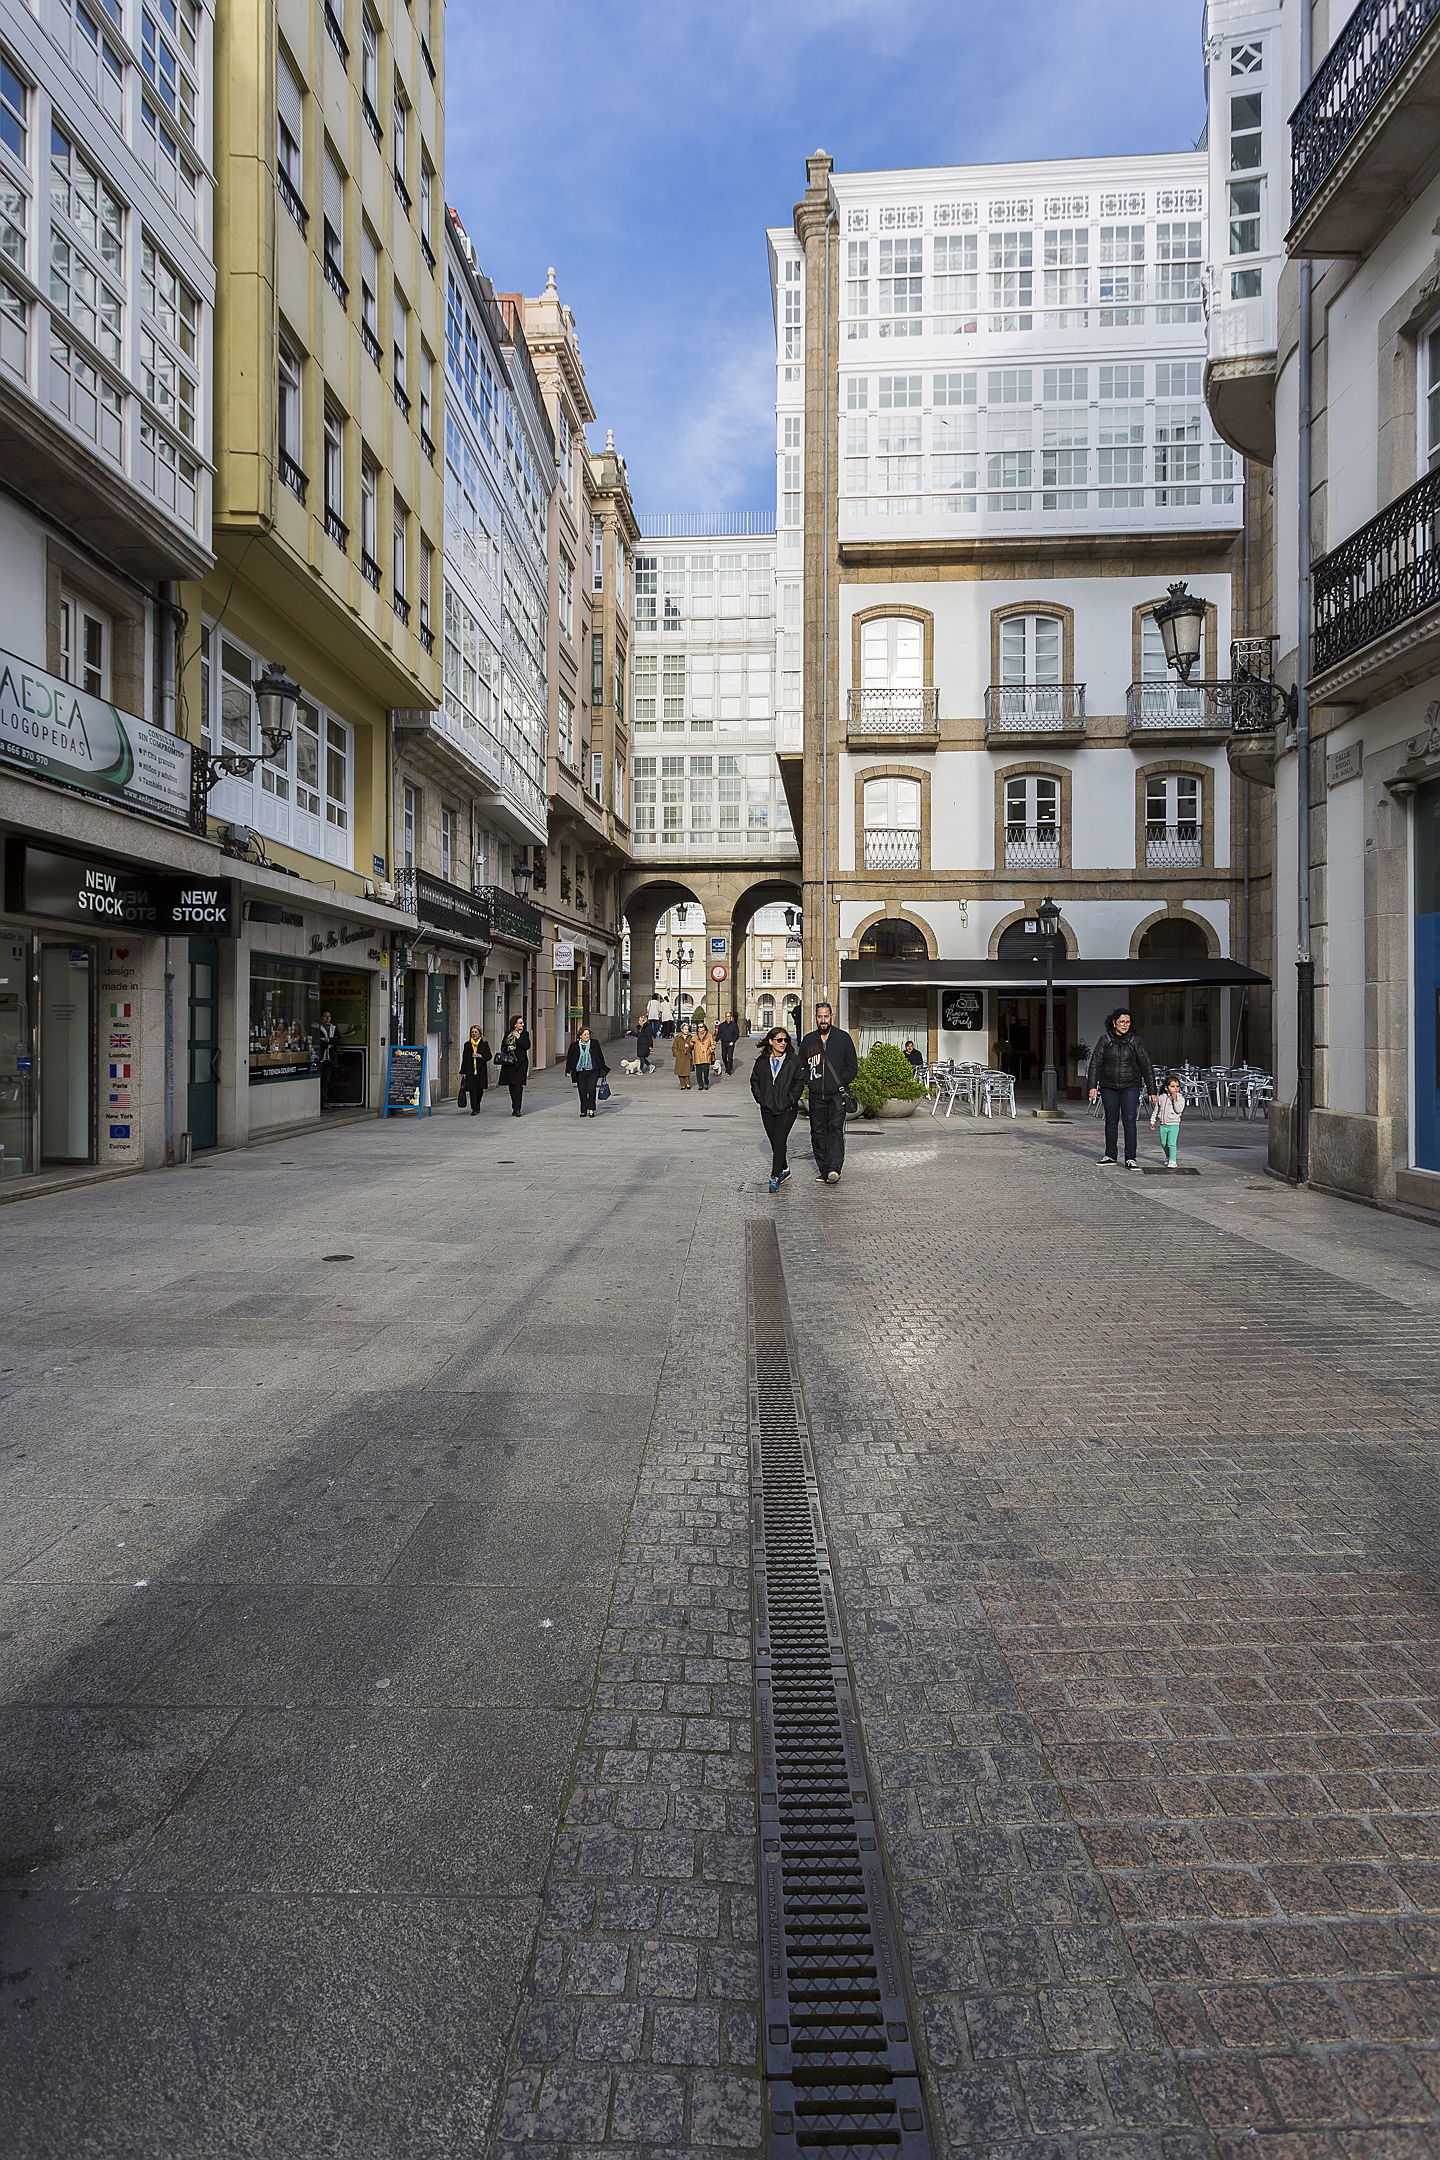  La Coruña, España
- _MG_2631.jpg